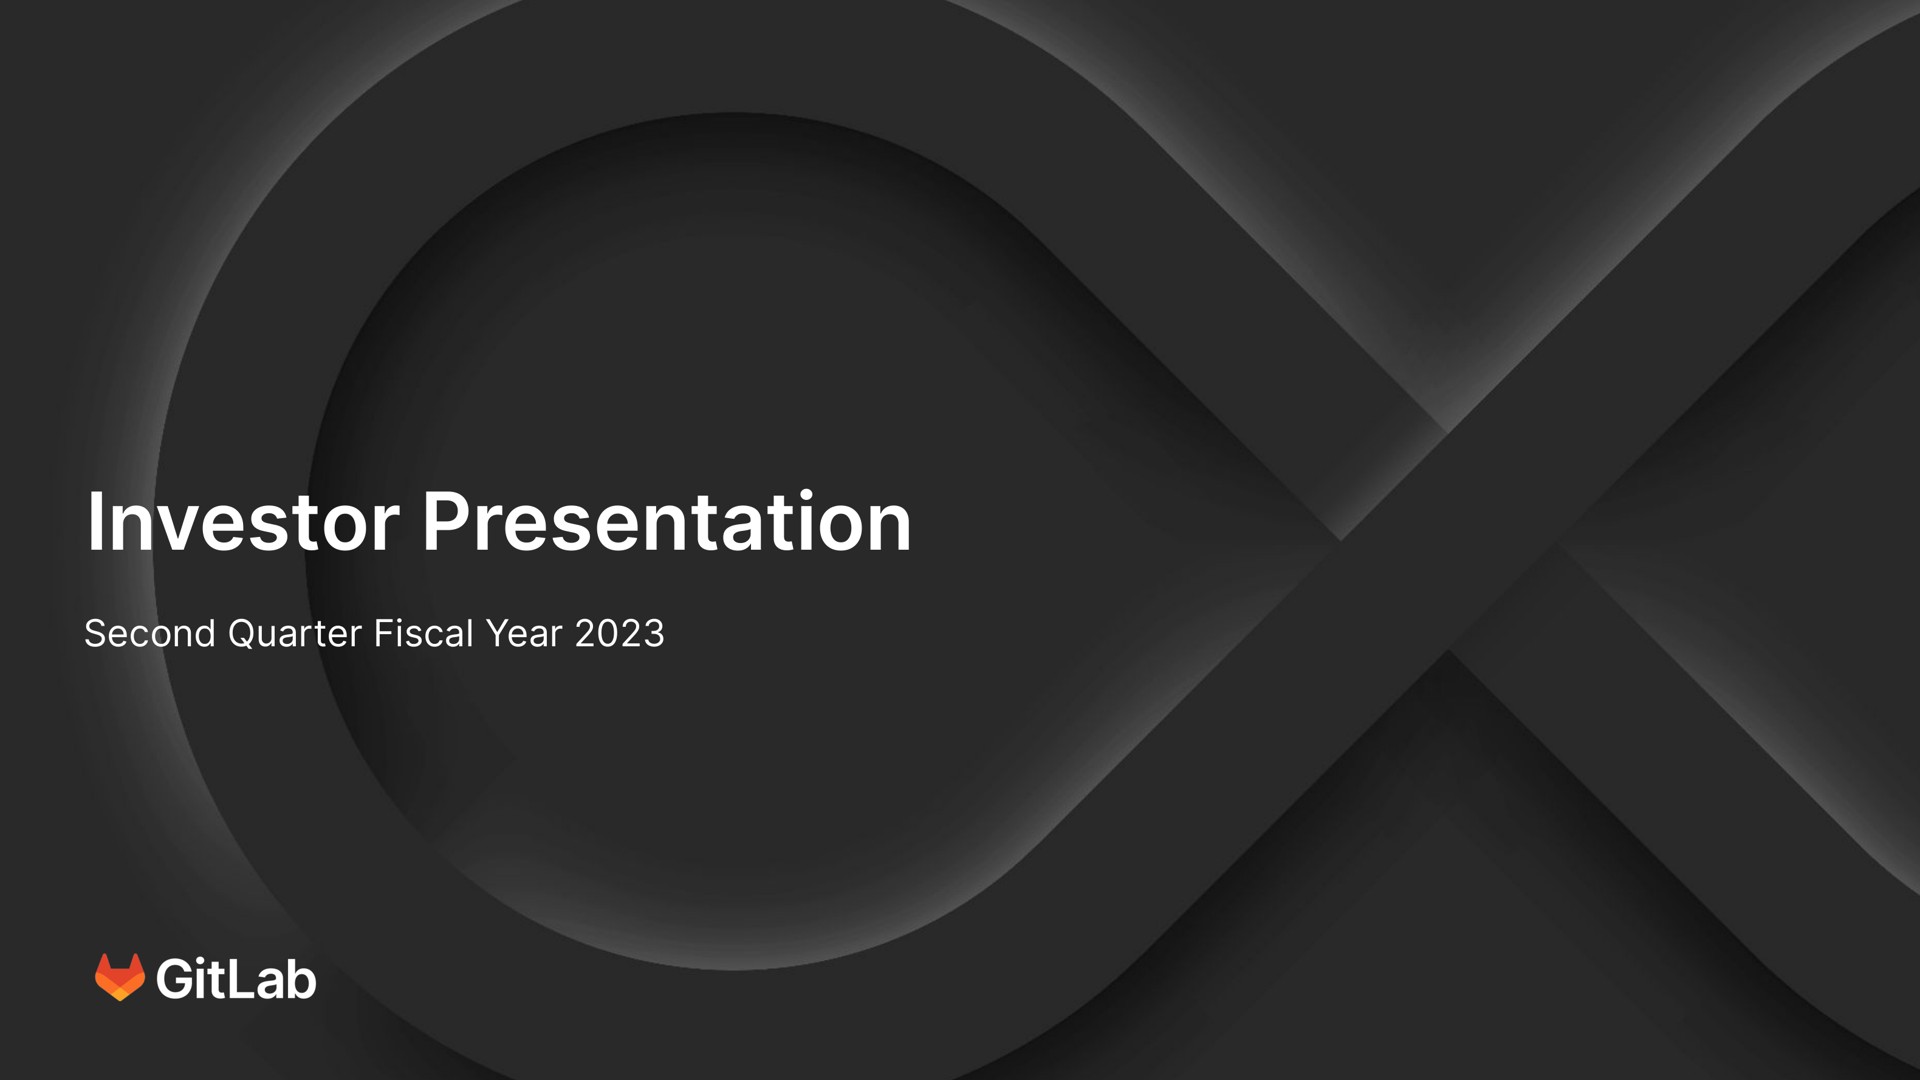 investor presentation act | GitLab